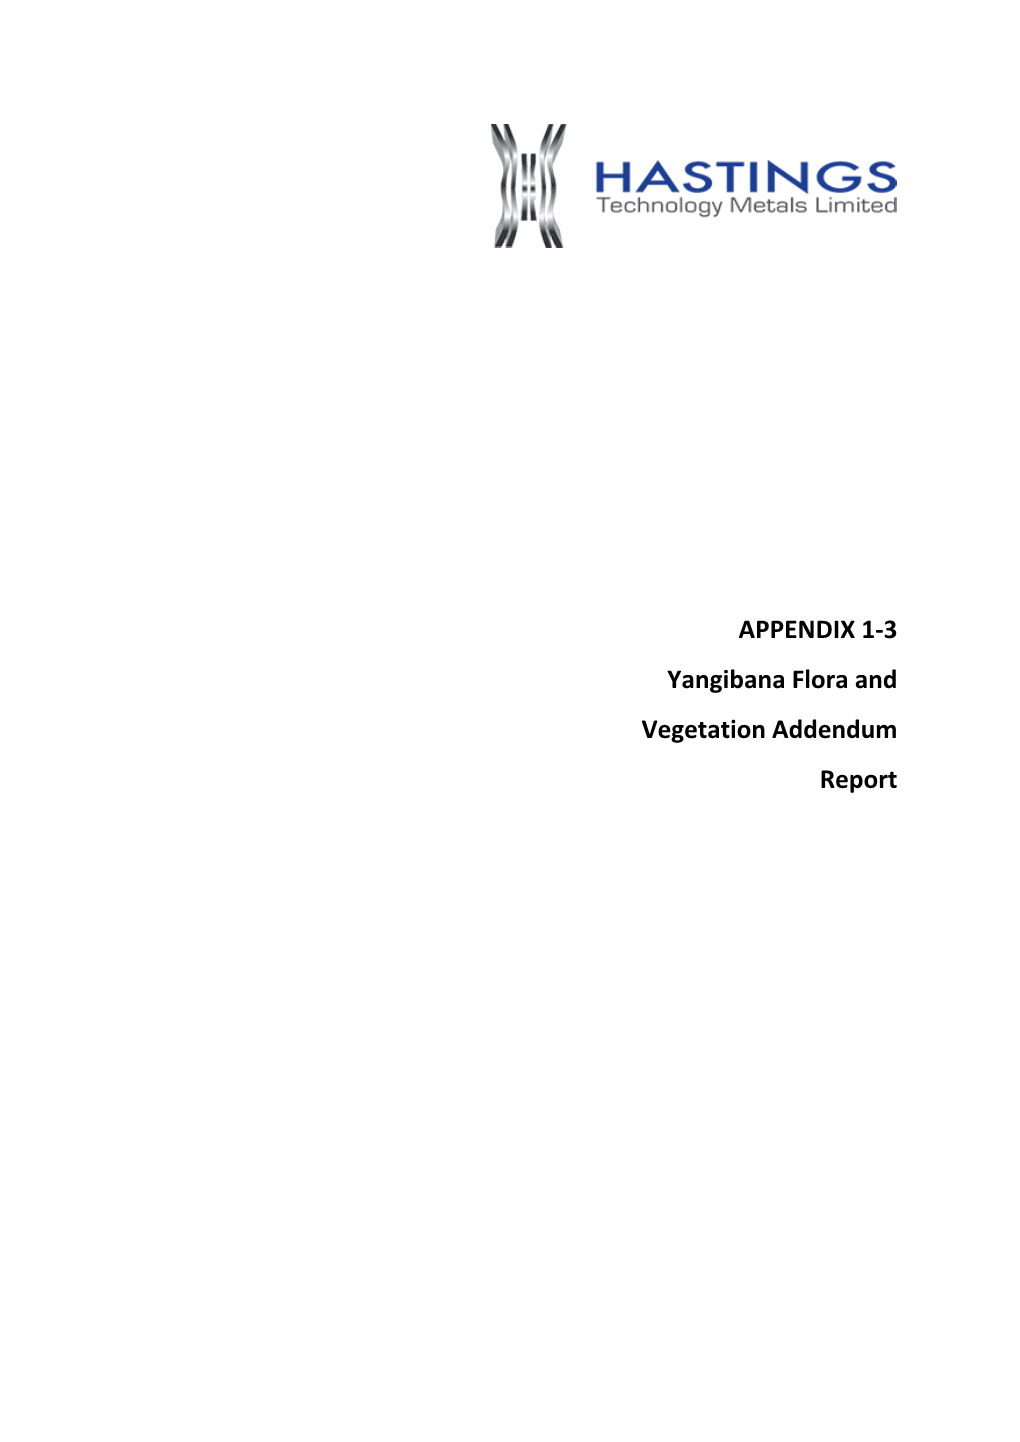 Hastings APPENDIX 1-3.Pdf (PDF, 7.1